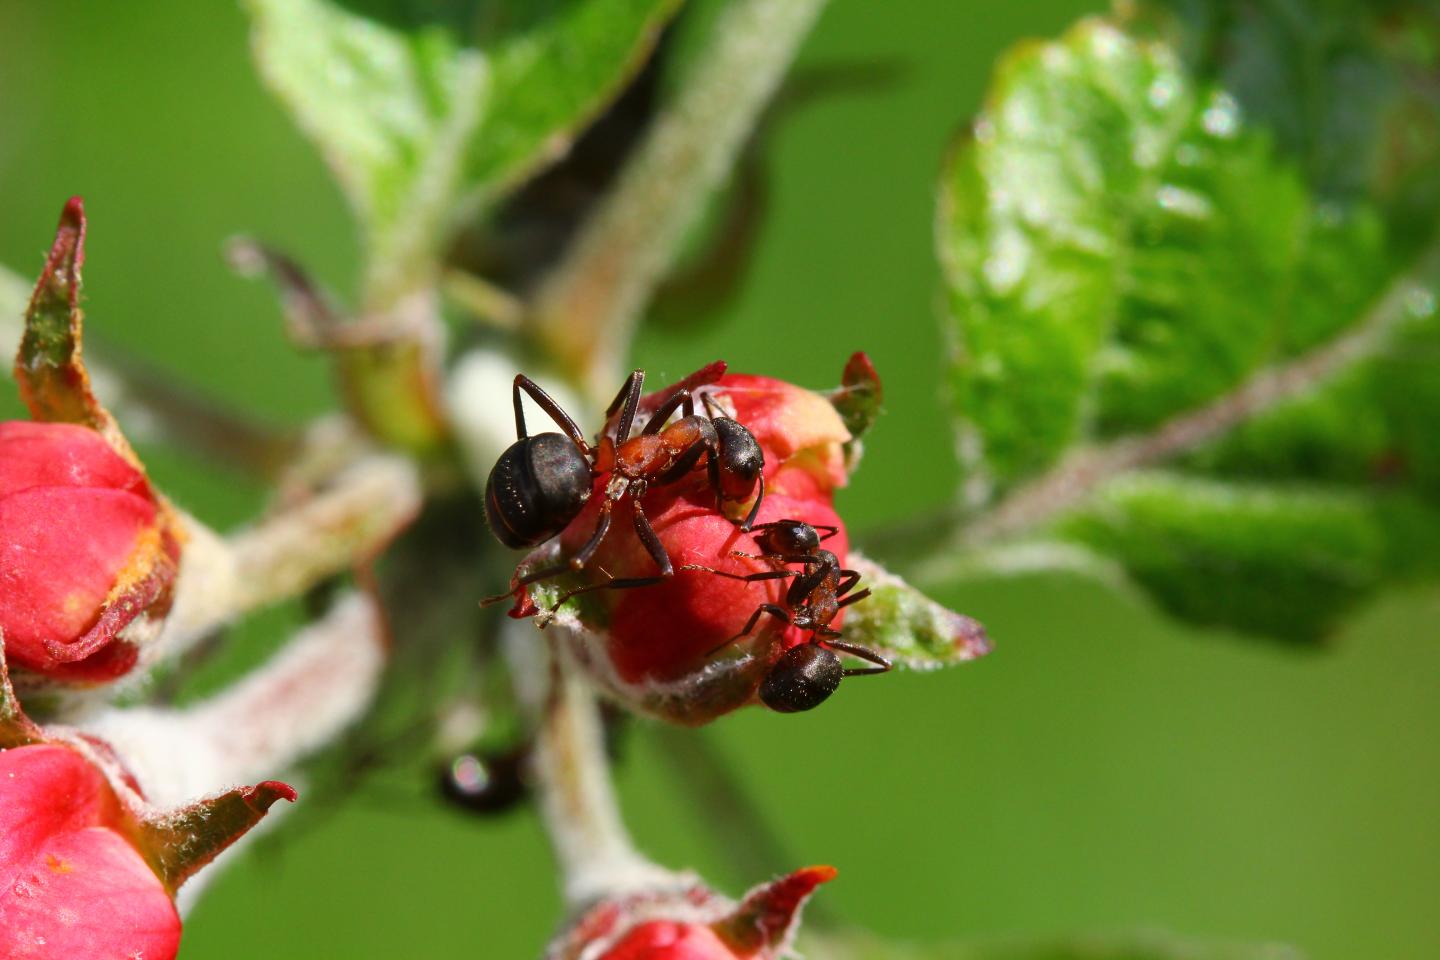 Ants in Apple Plantation